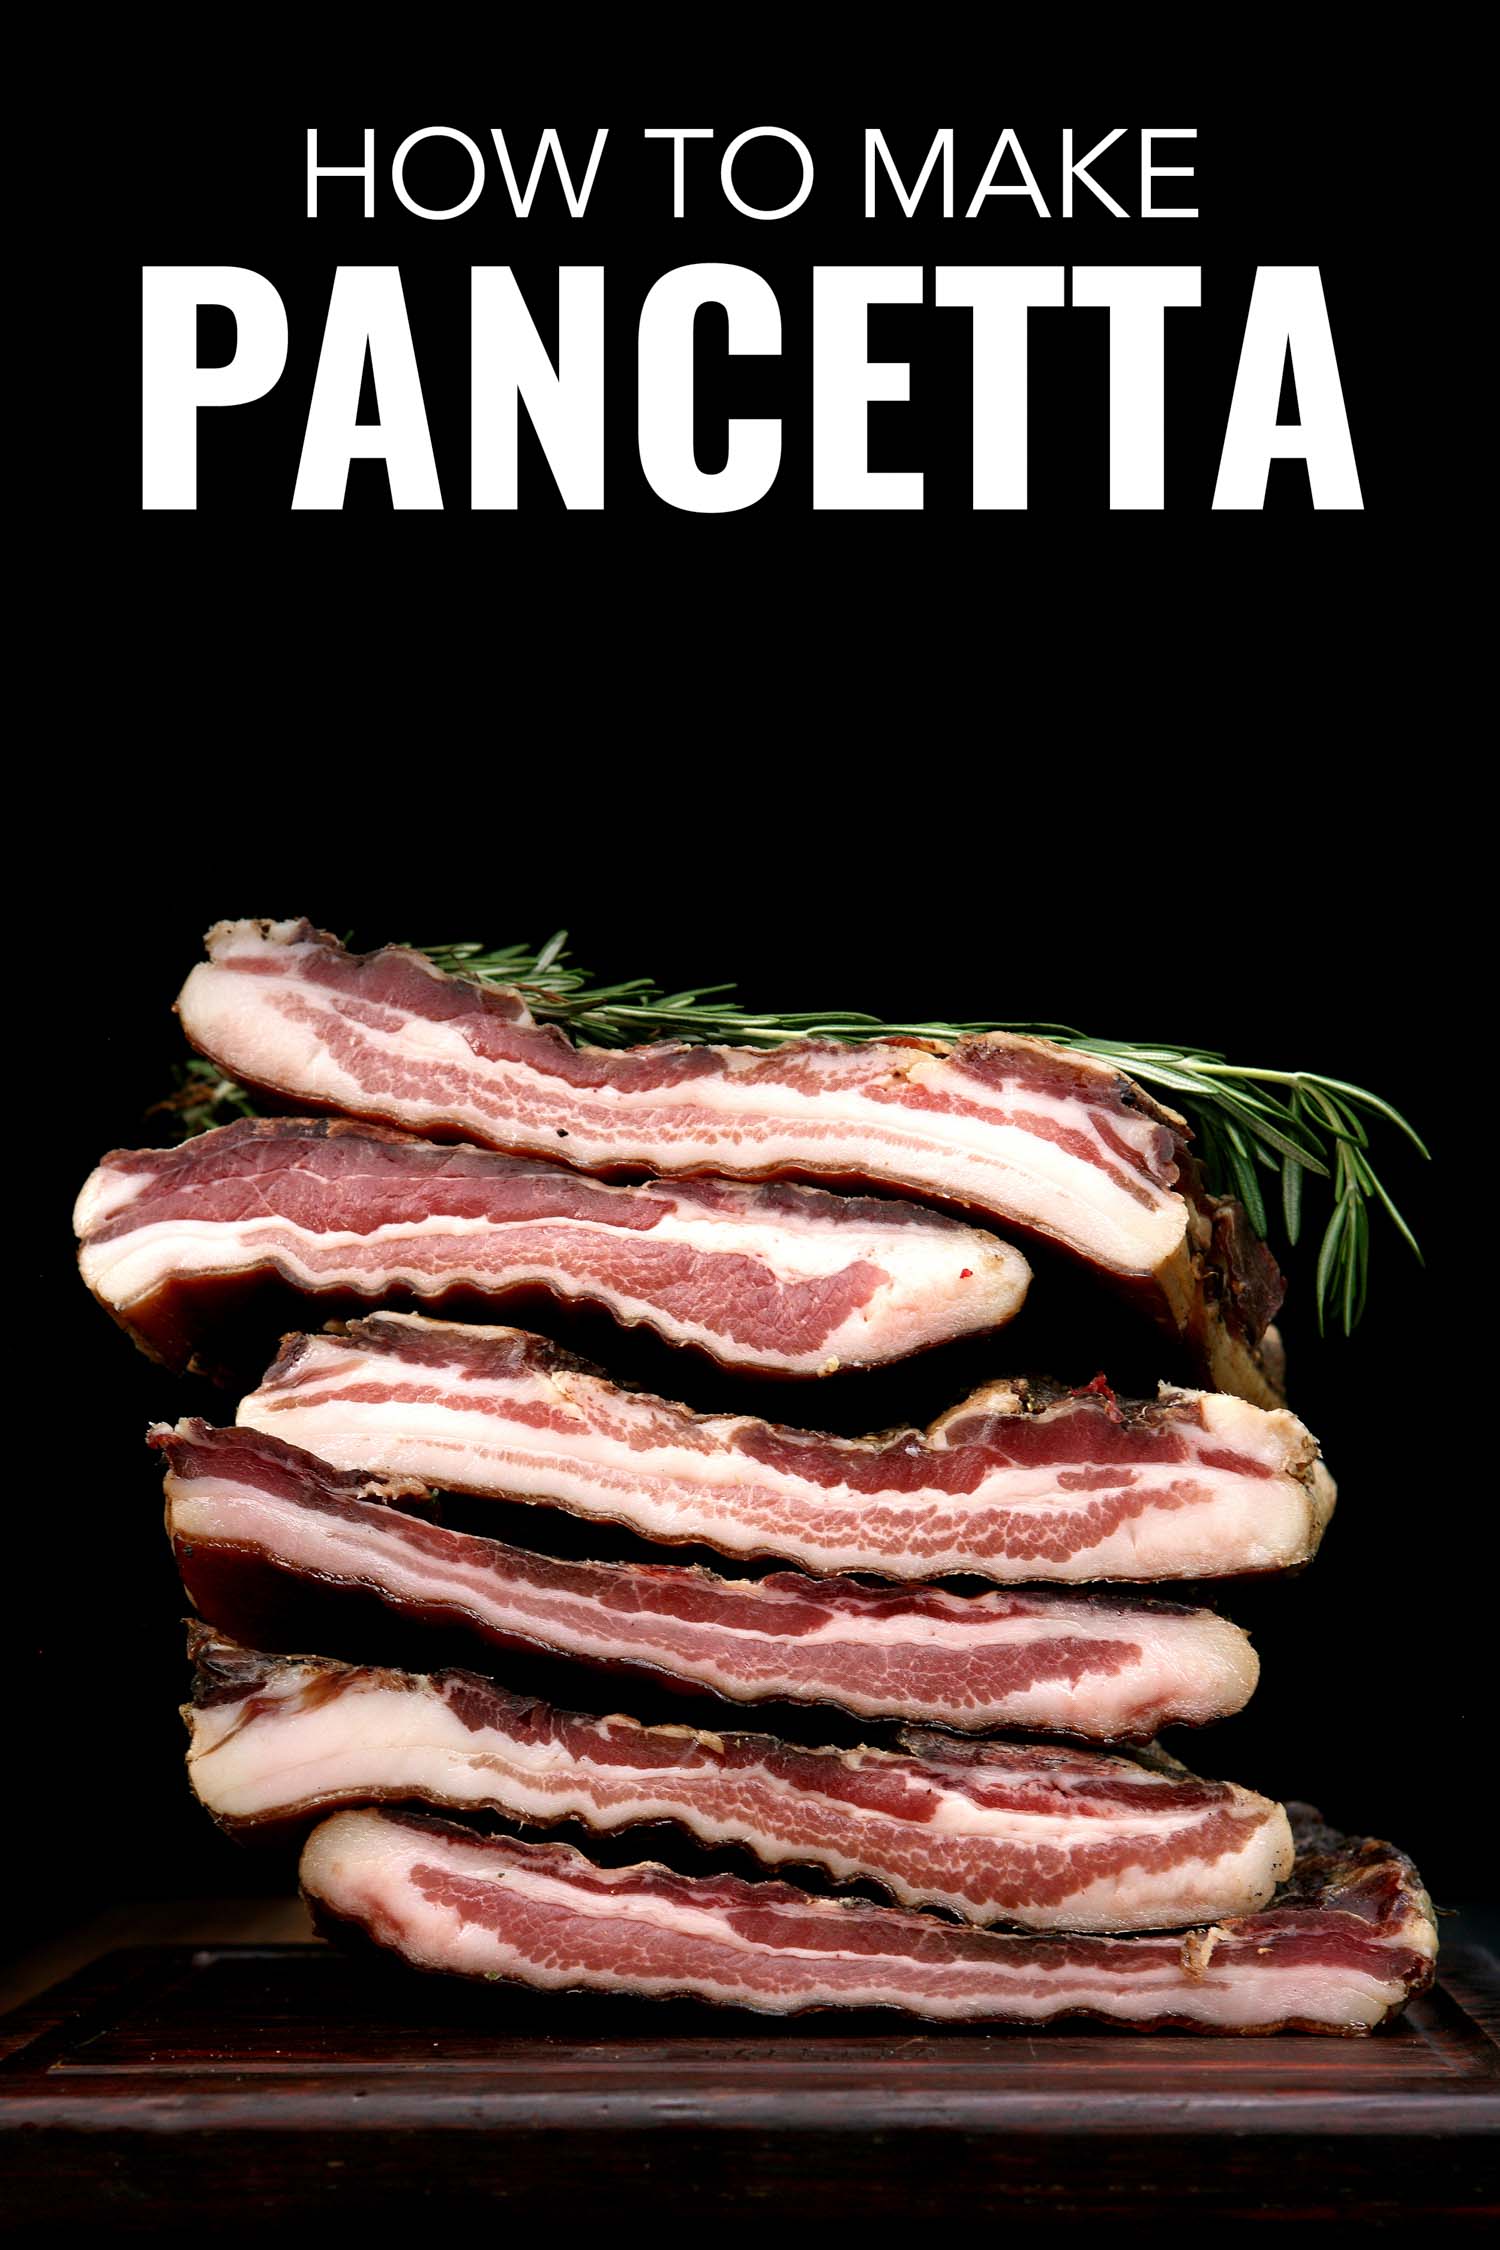 Stack of pancetta